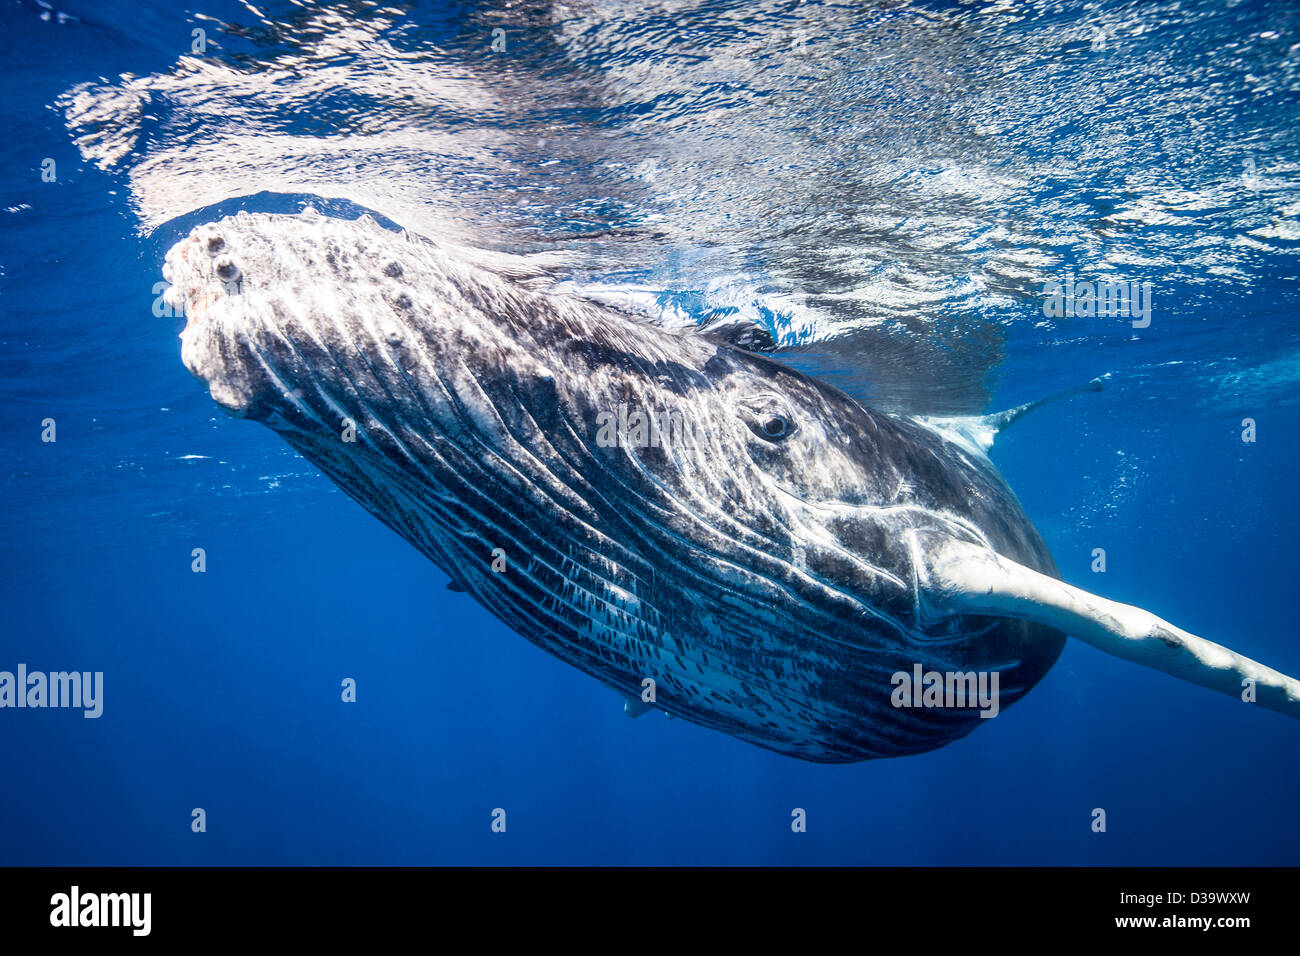 Humpback whale swimming underwater Stock Photo